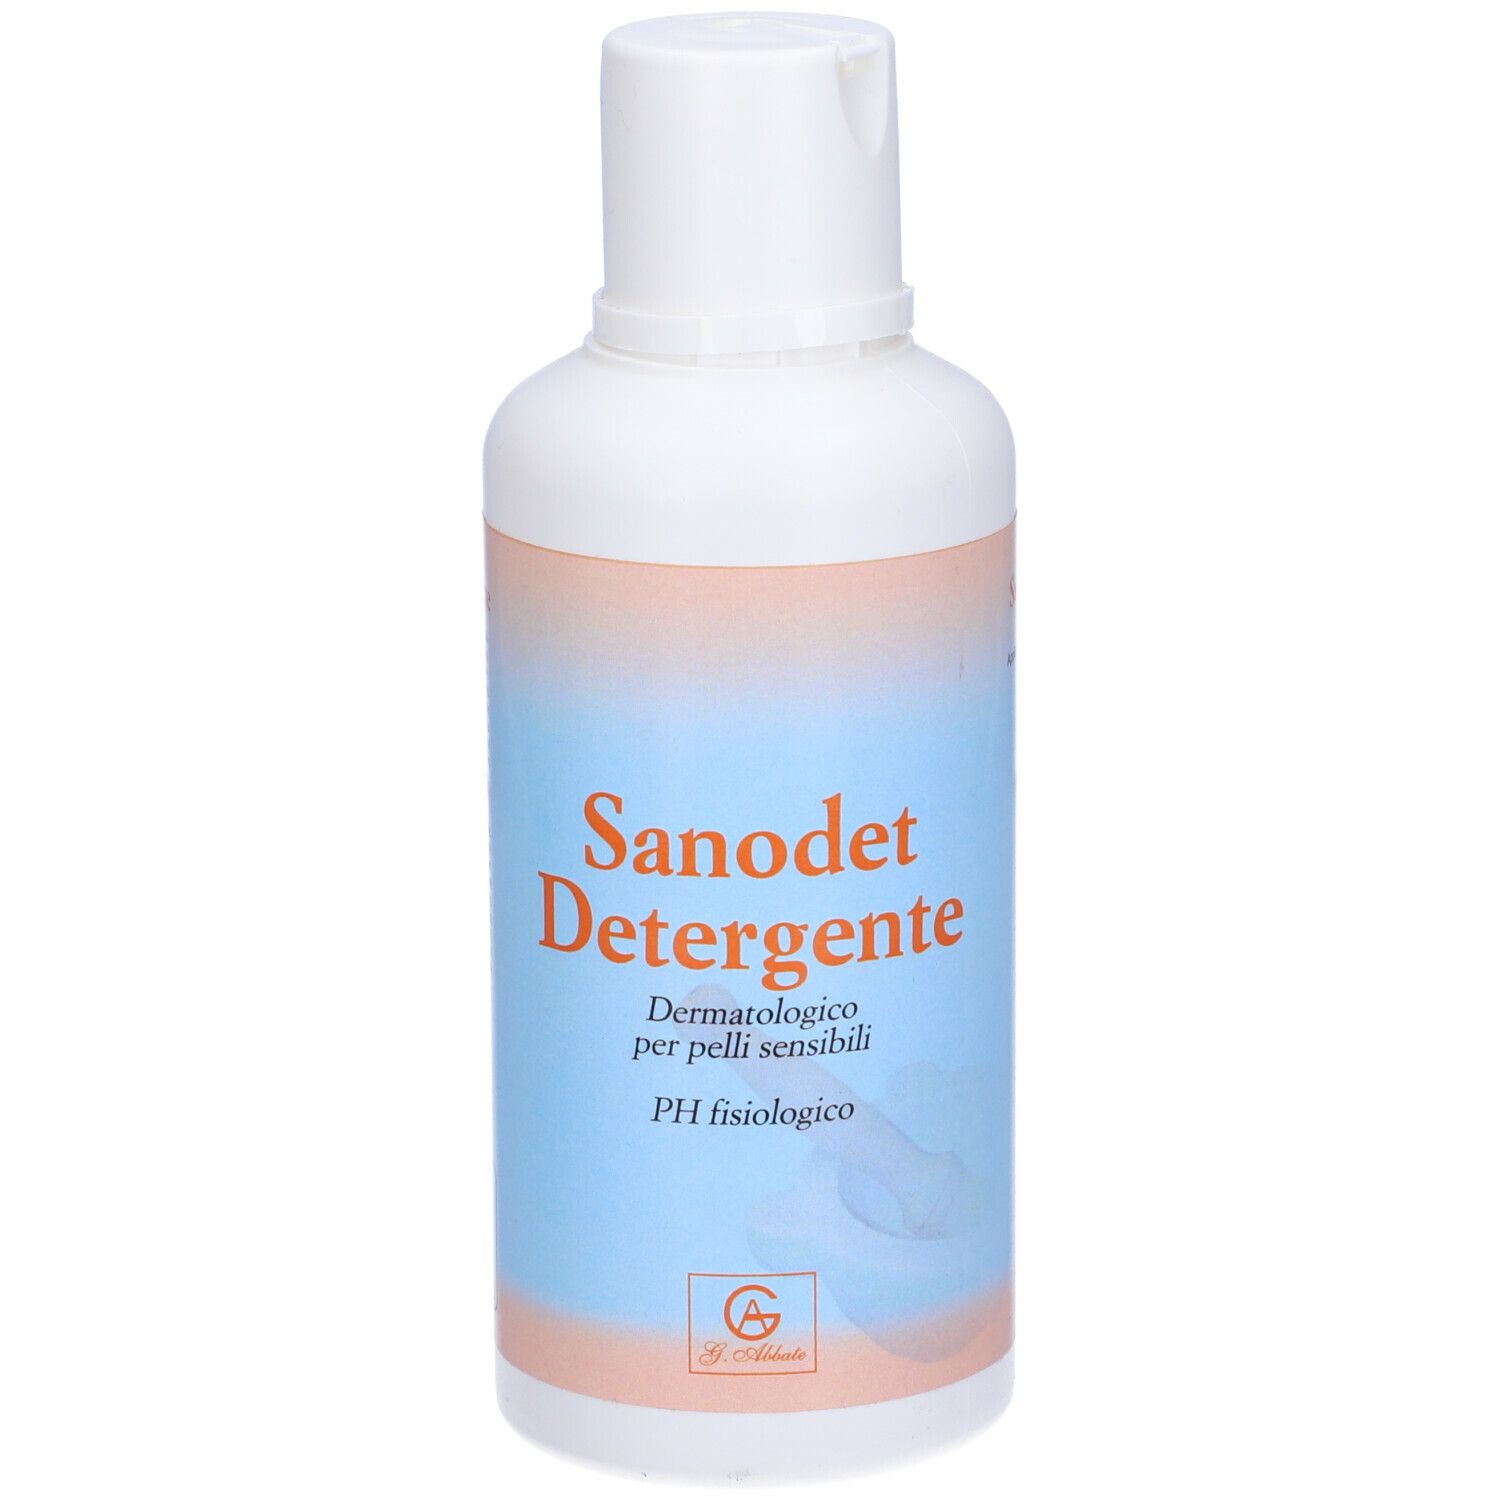 Image of Sanodet Detergente Dermatologico